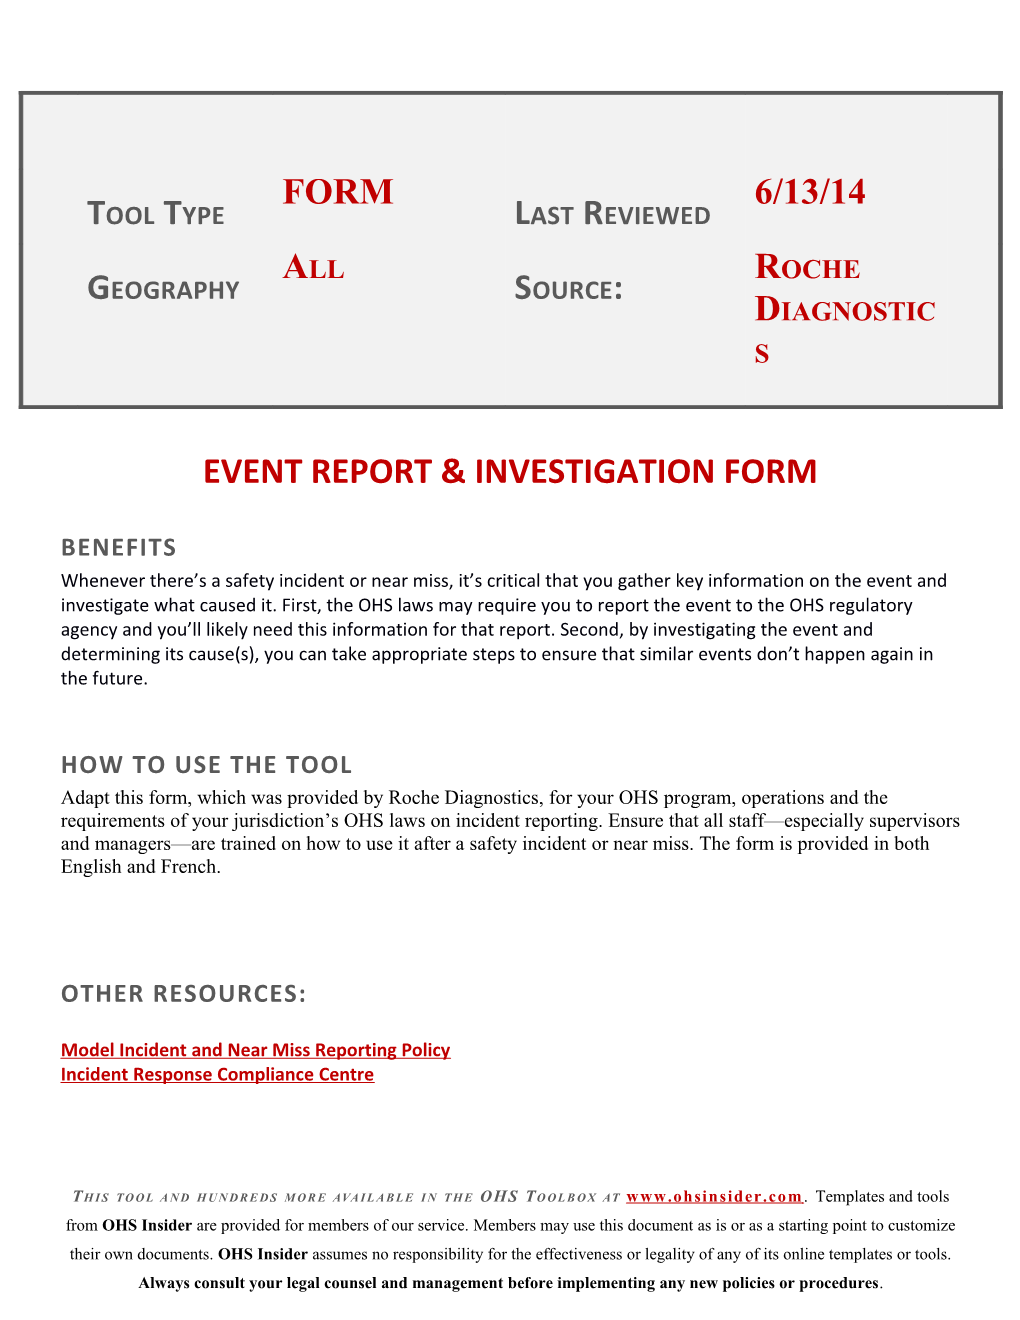 Event Report & Investigation Form